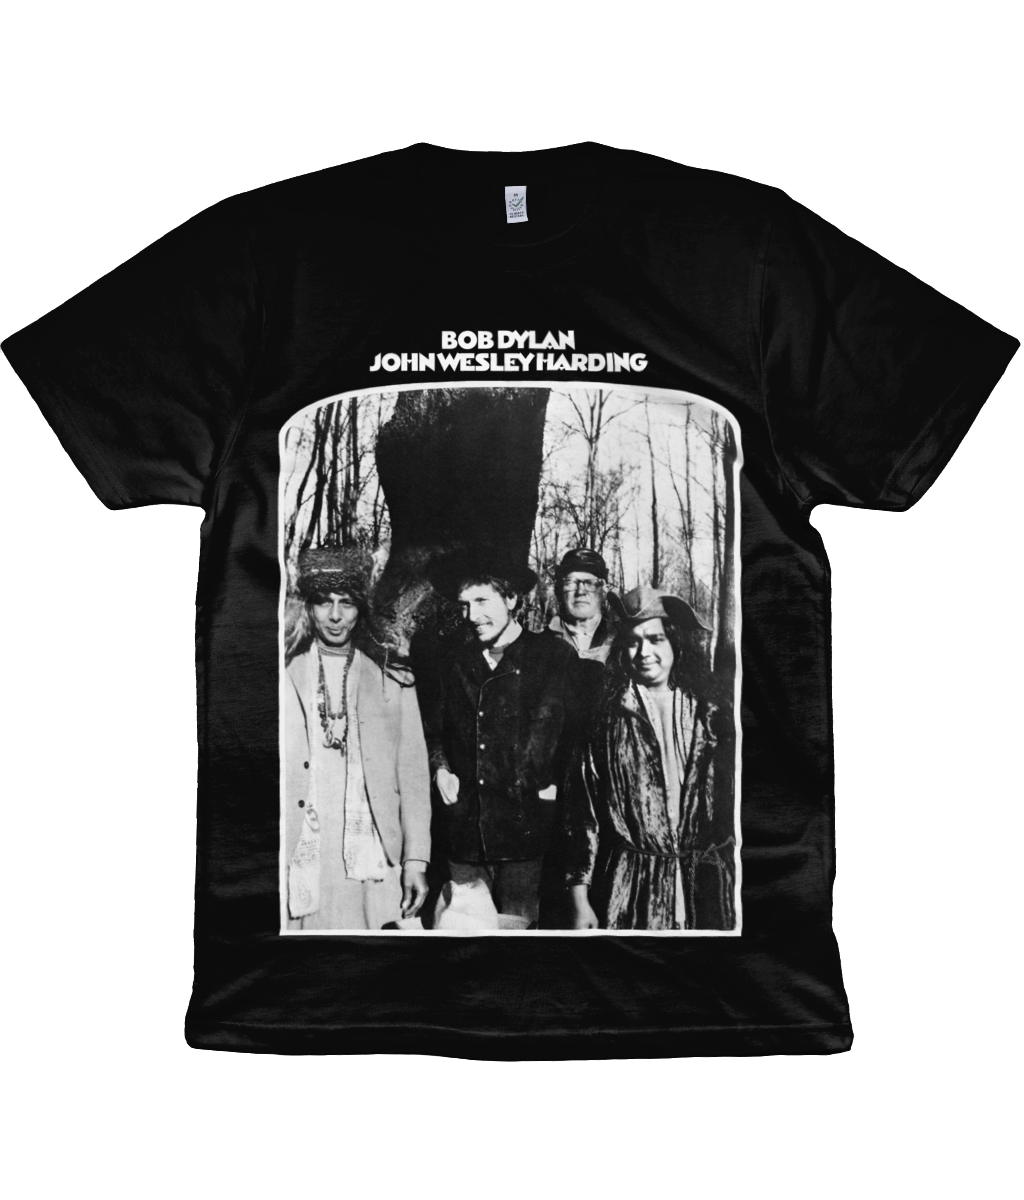 BOB DYLAN - JOHN WESLEY HARDING - 1967 - Black & White